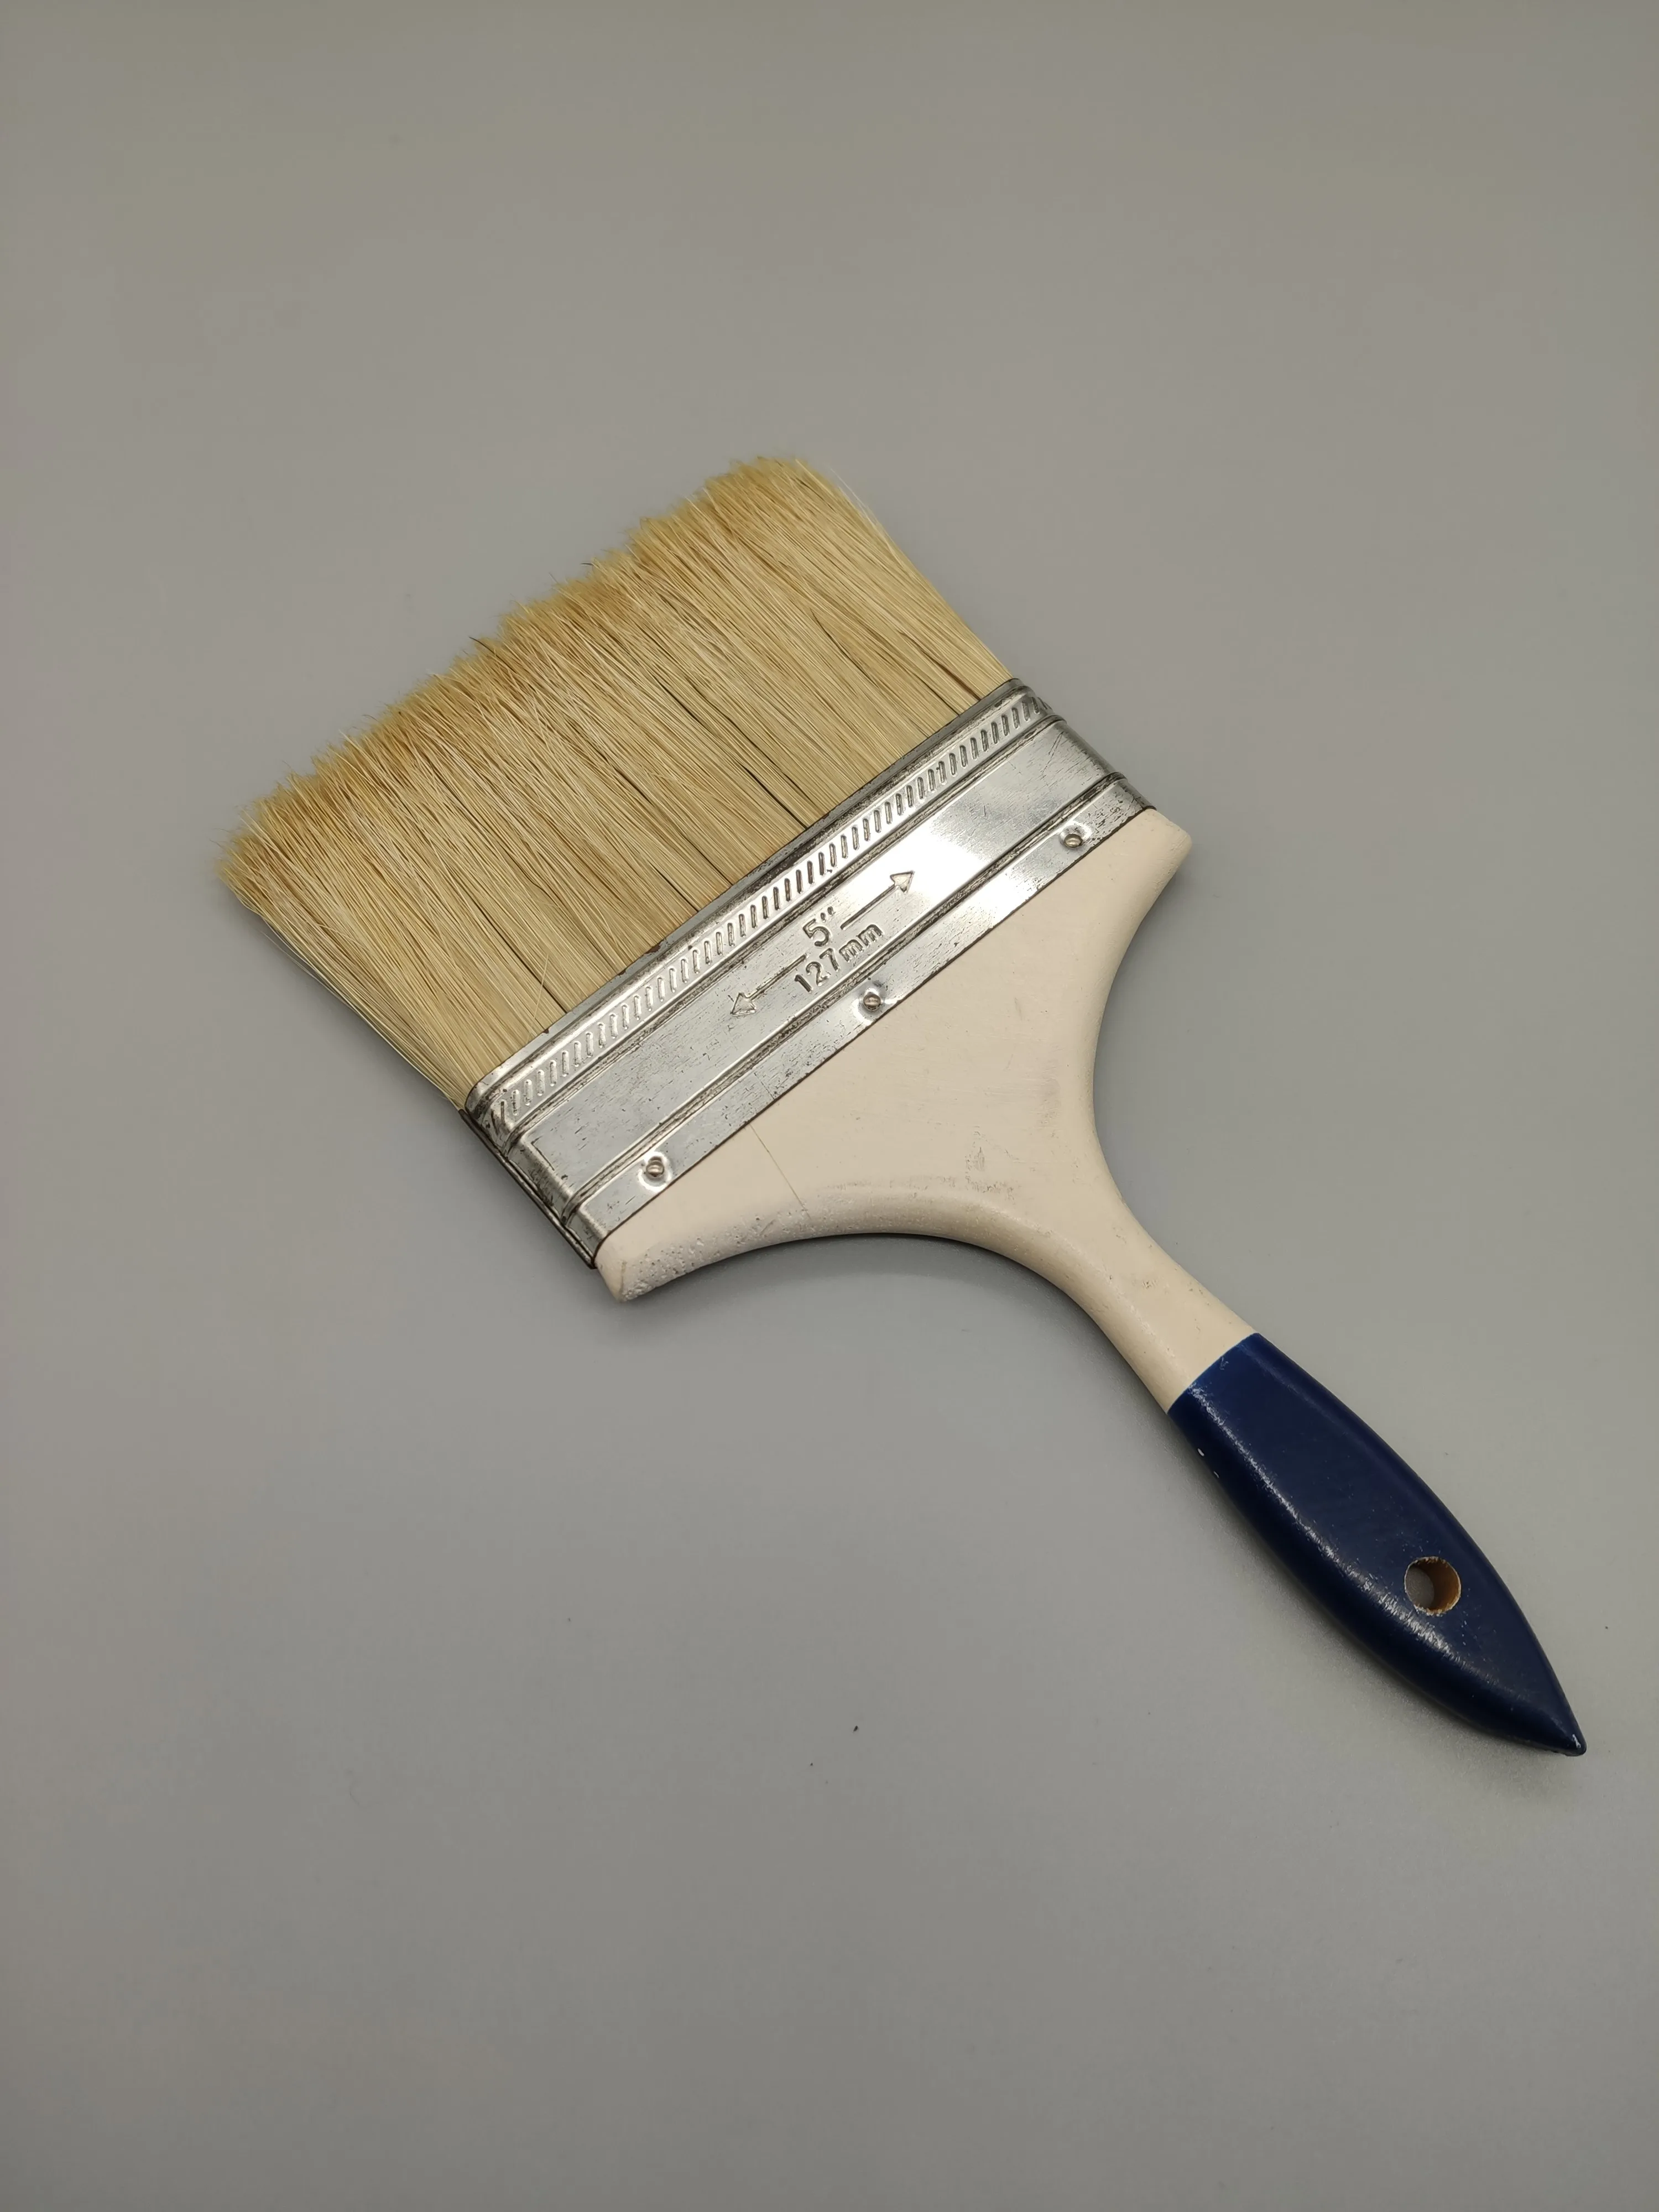 China quaility wooden handle paint brush  clean brush